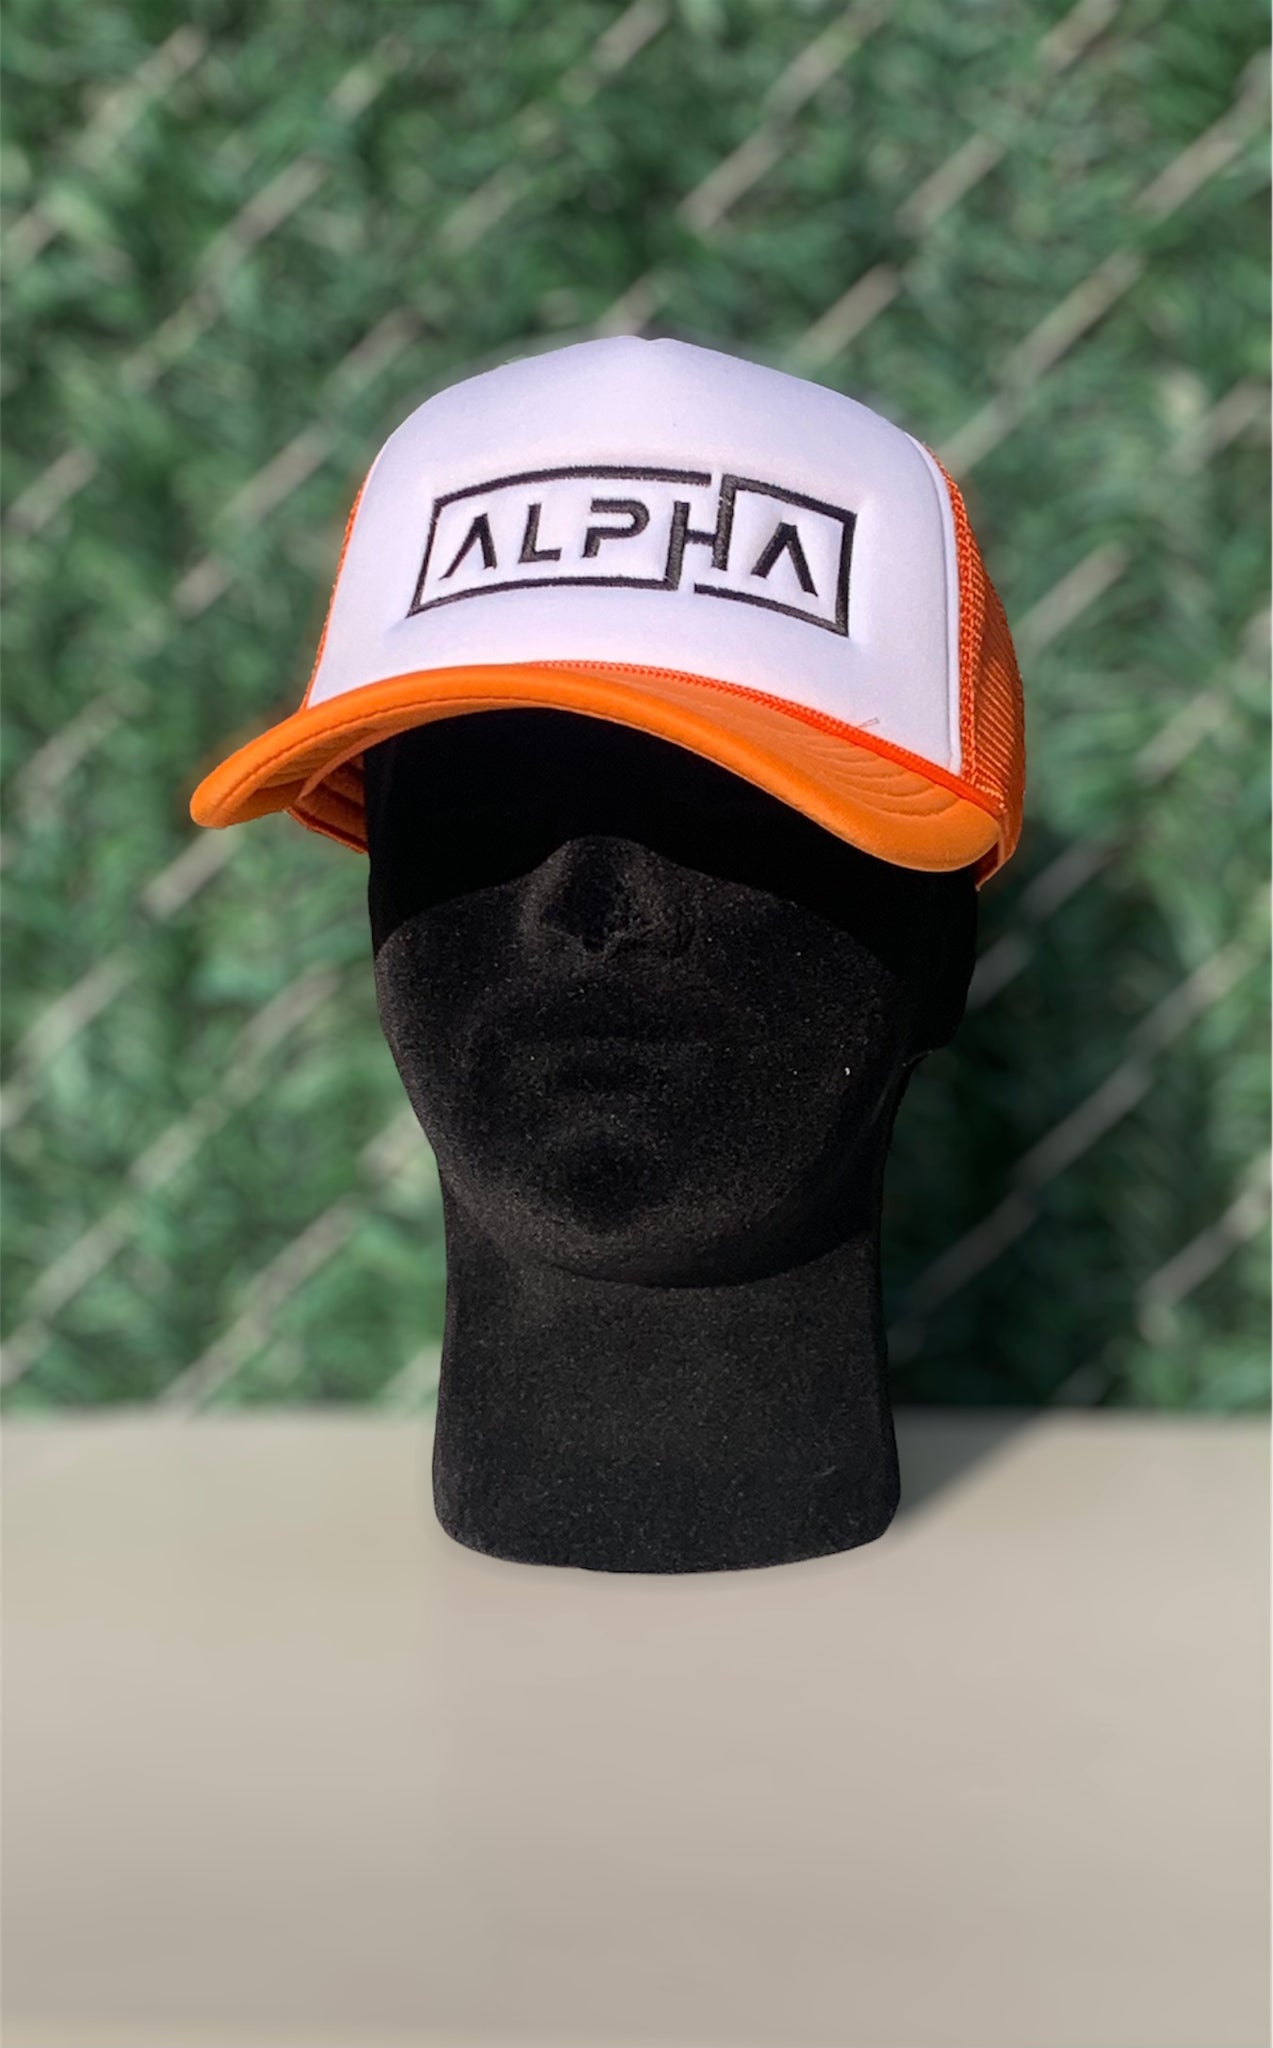 Alpha Trucker hat – Alphamenscare